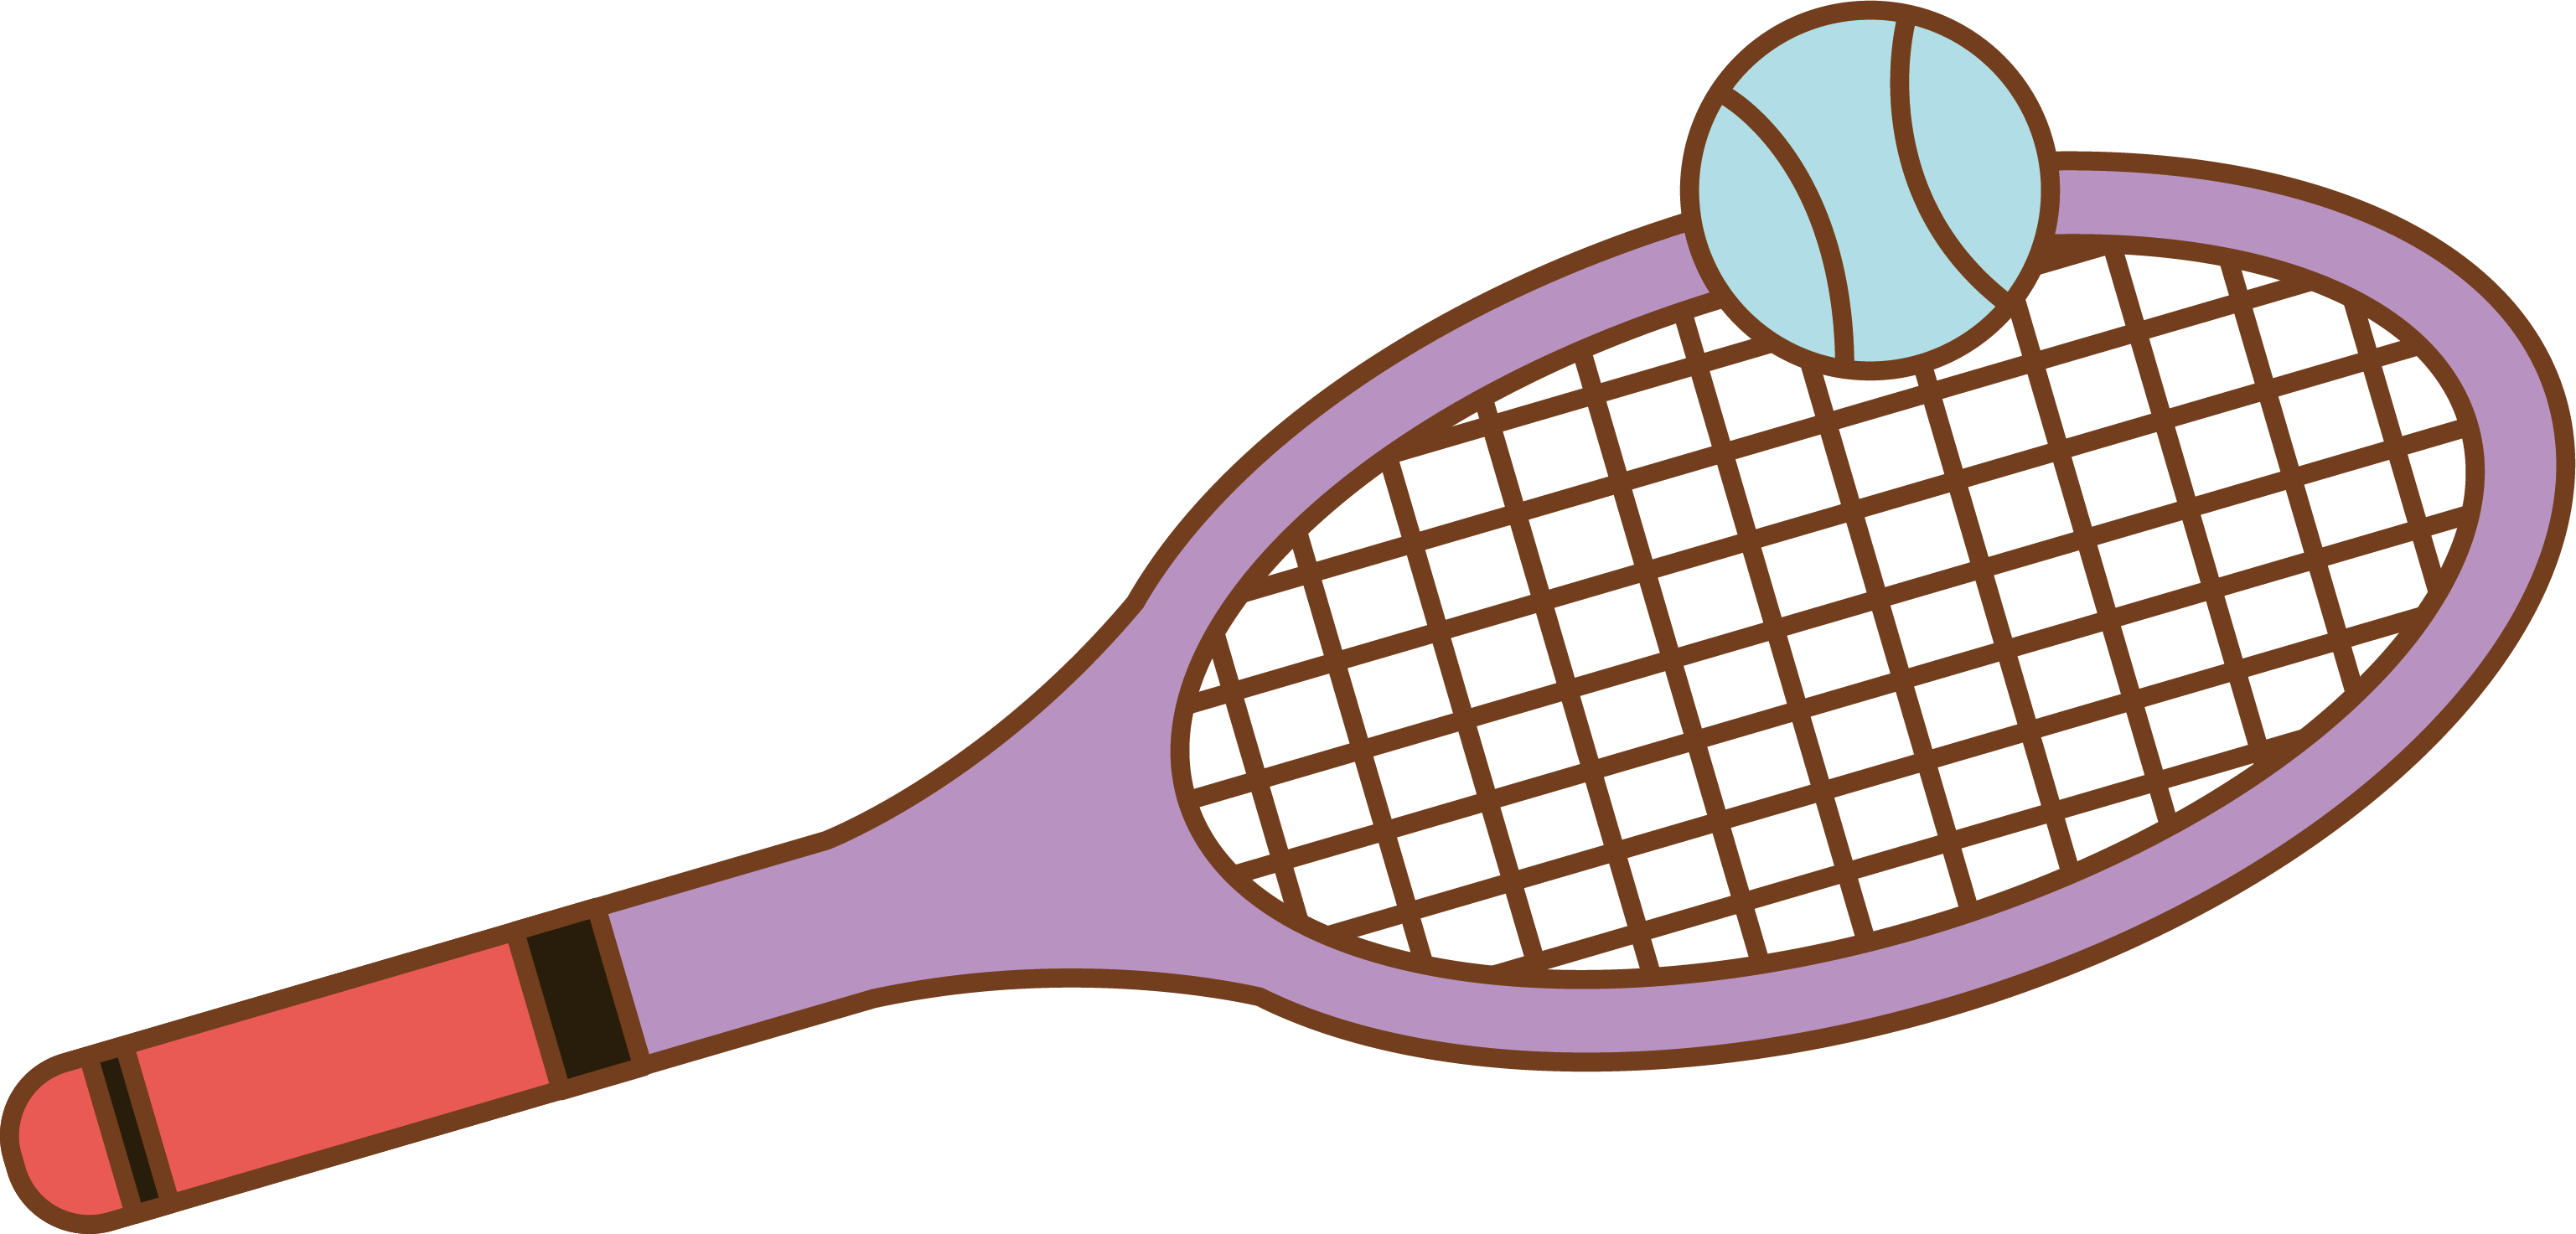 Tennis Racket Drawing at GetDrawings Free download